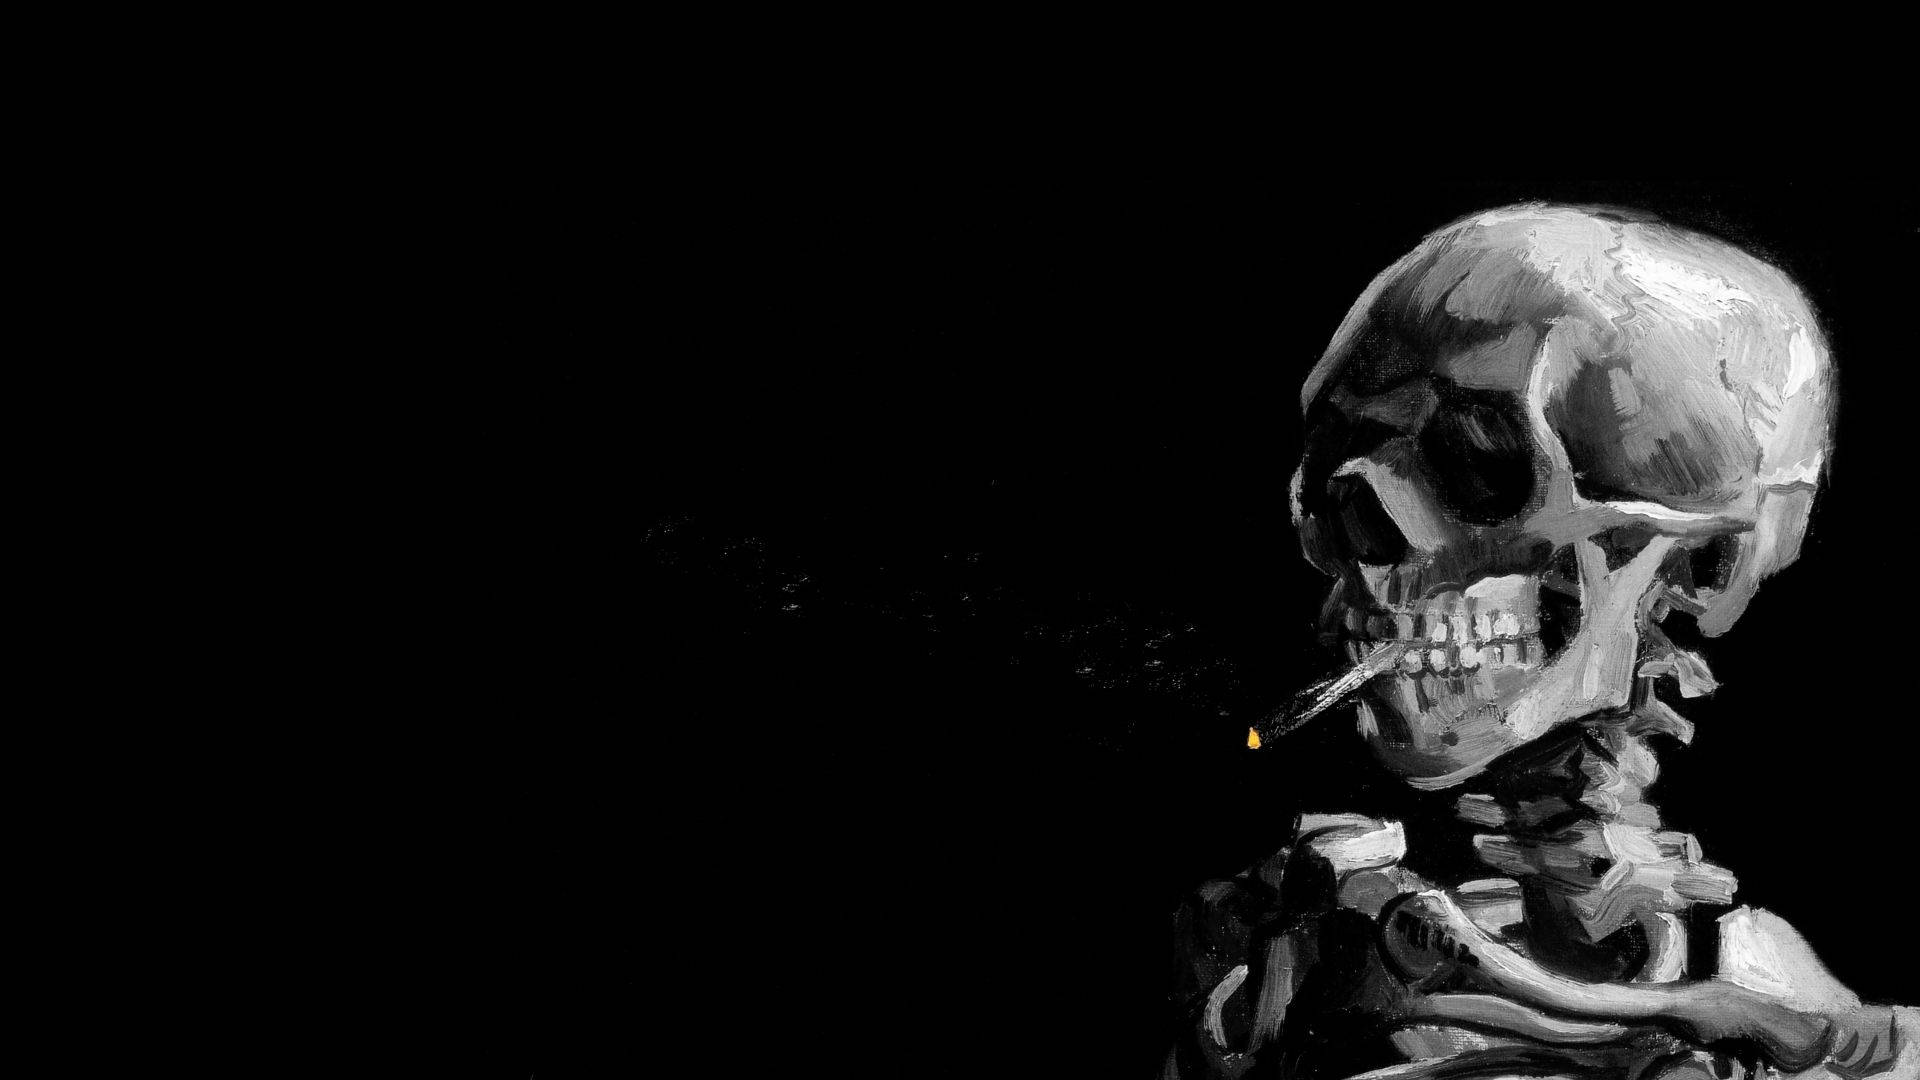 Download Cigarette Smoke Skull Iphone Wallpaper | Wallpapers.com